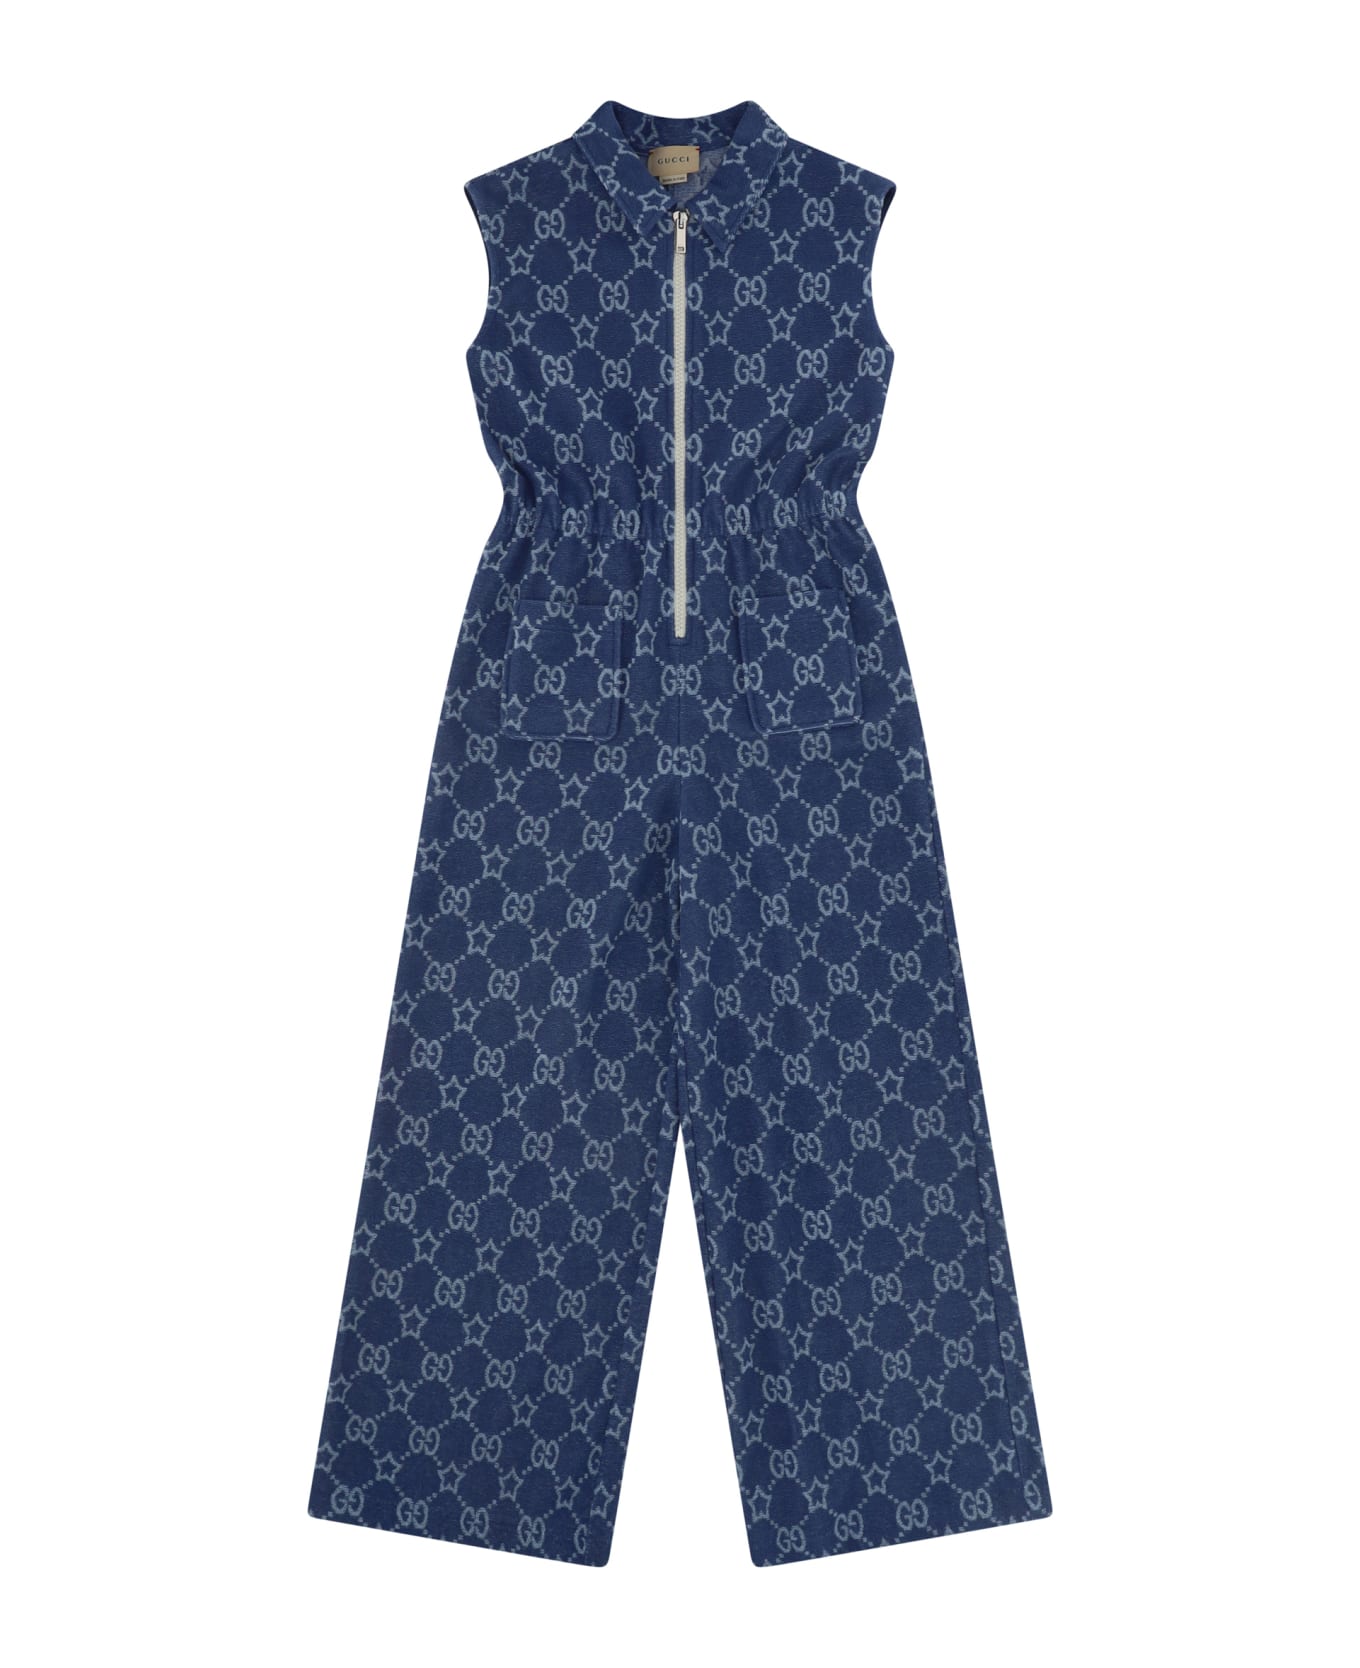 Gucci Jumpsuit Dress For Girl - Avio/mc